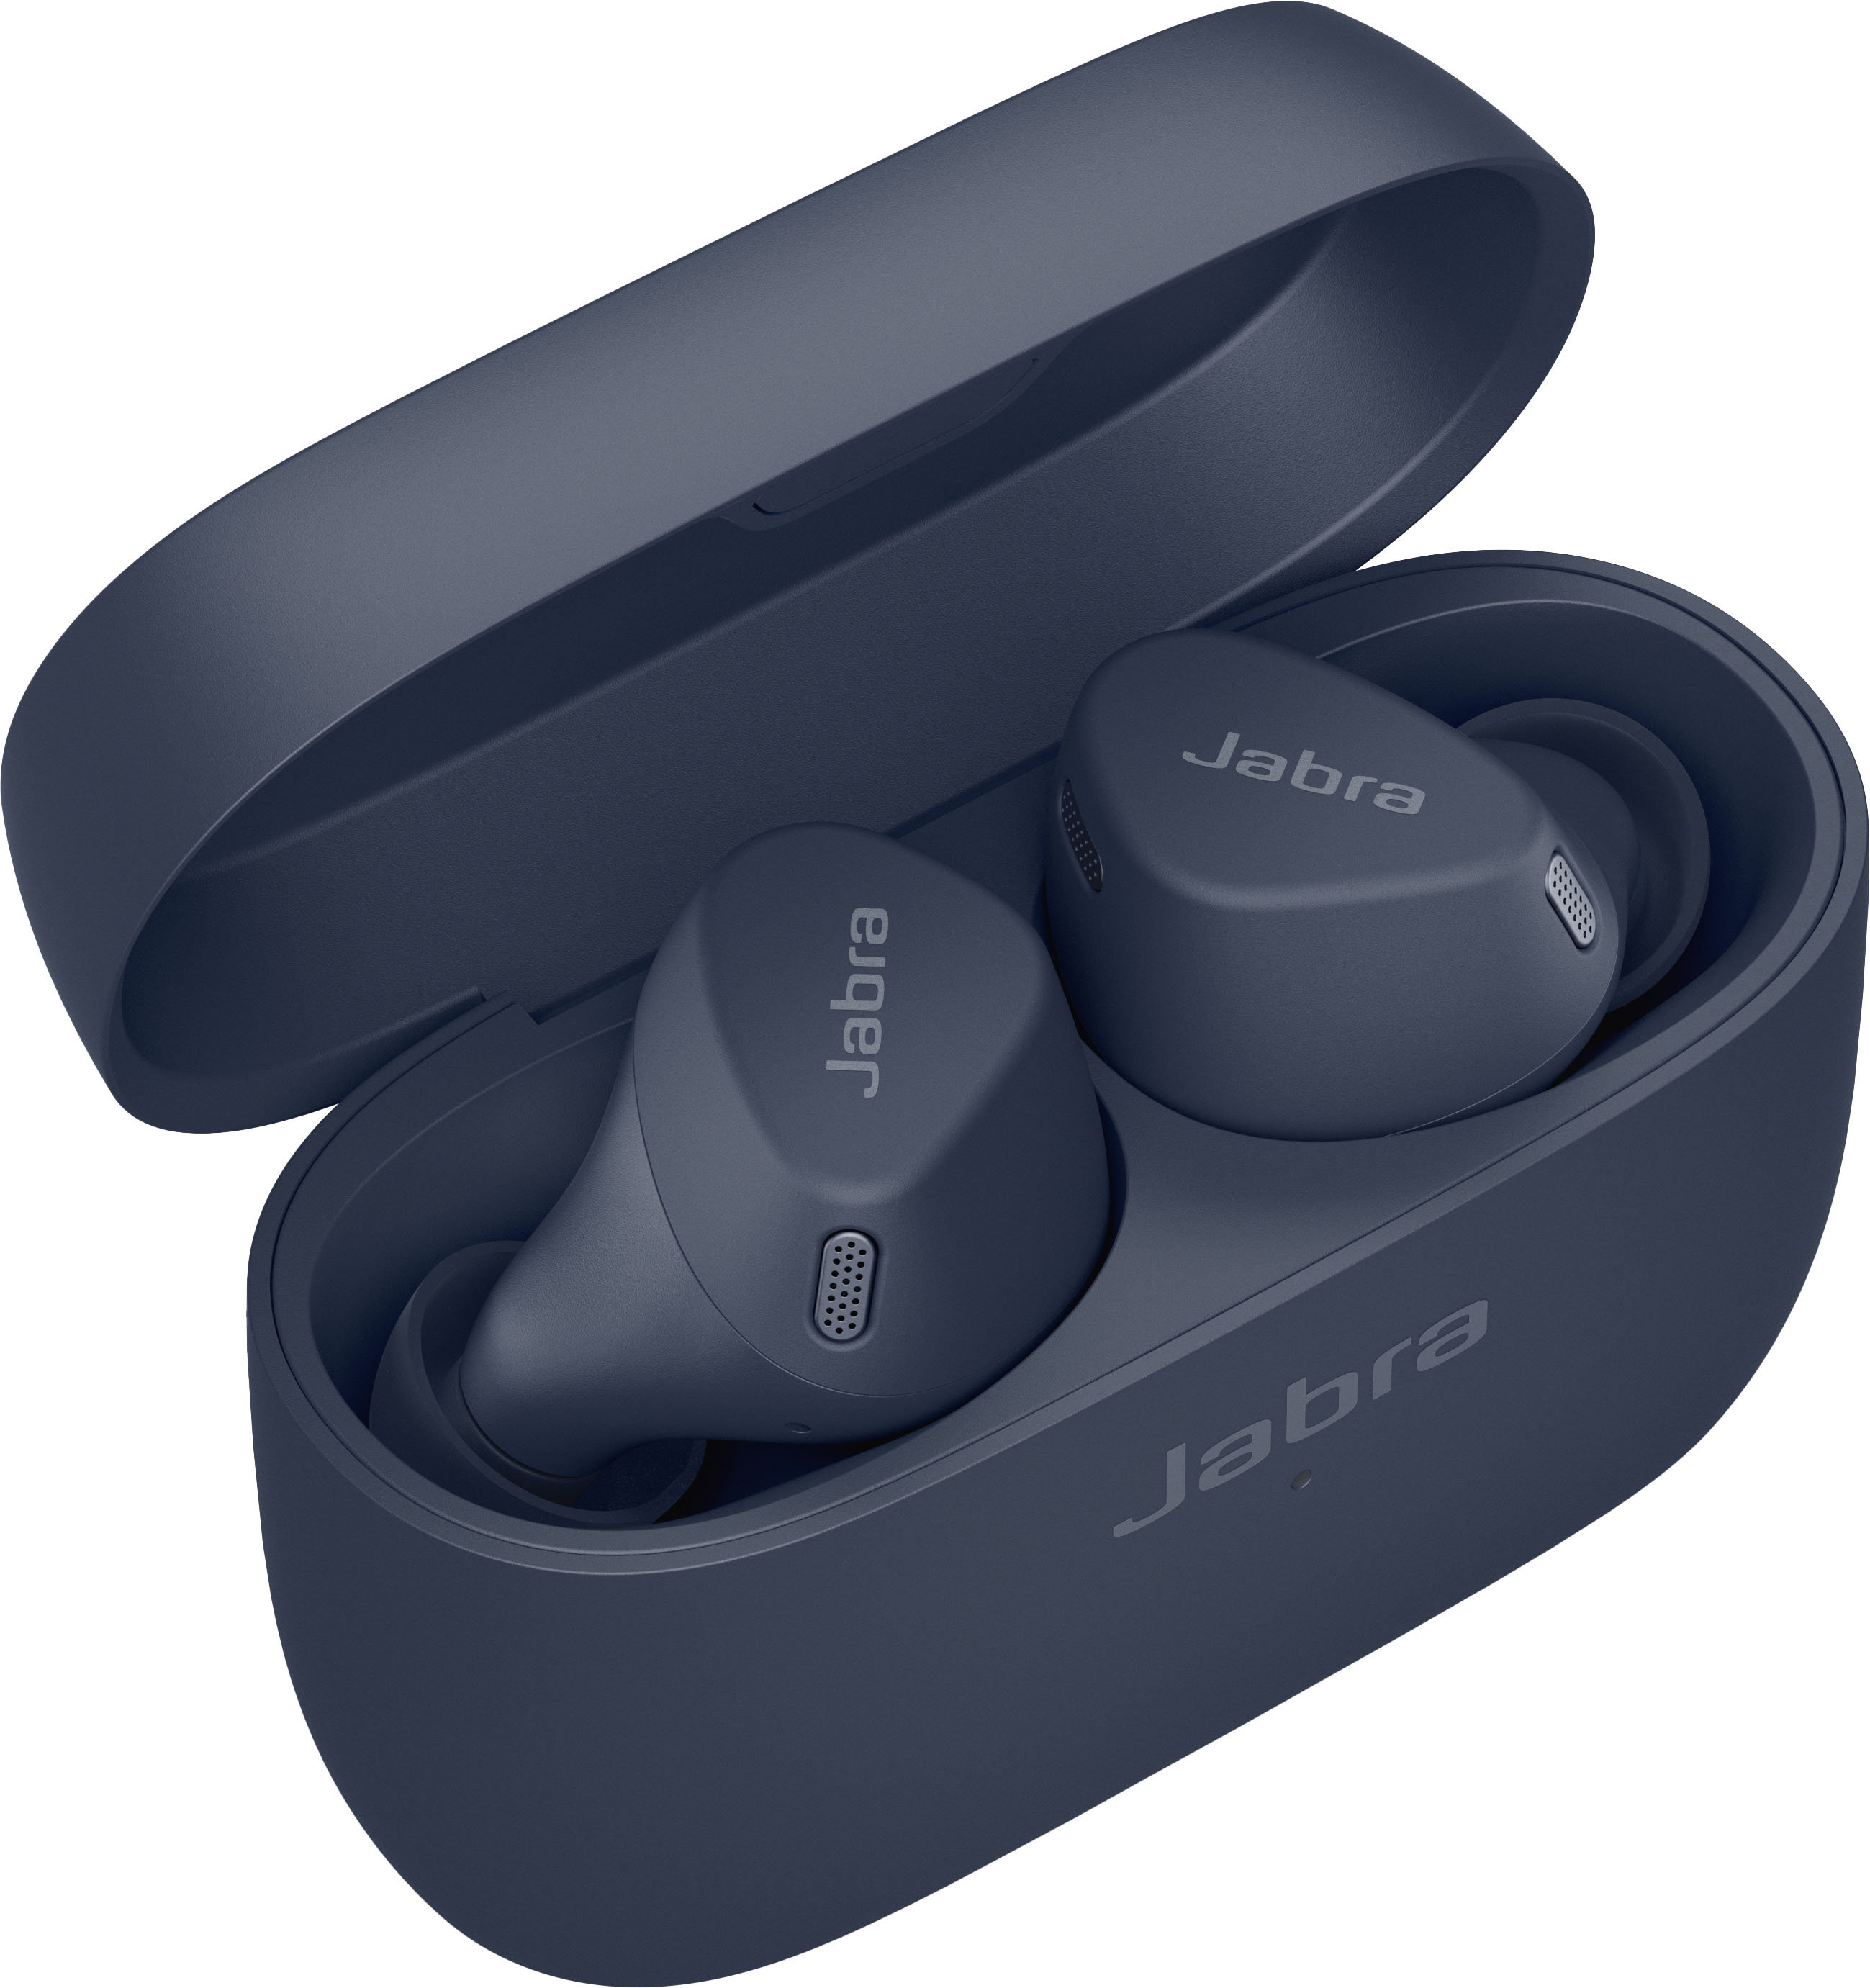 Angle View: Jabra - Elite Active 75t True Wireless Noise Cancelling In-Ear Headphones - Titanium Black